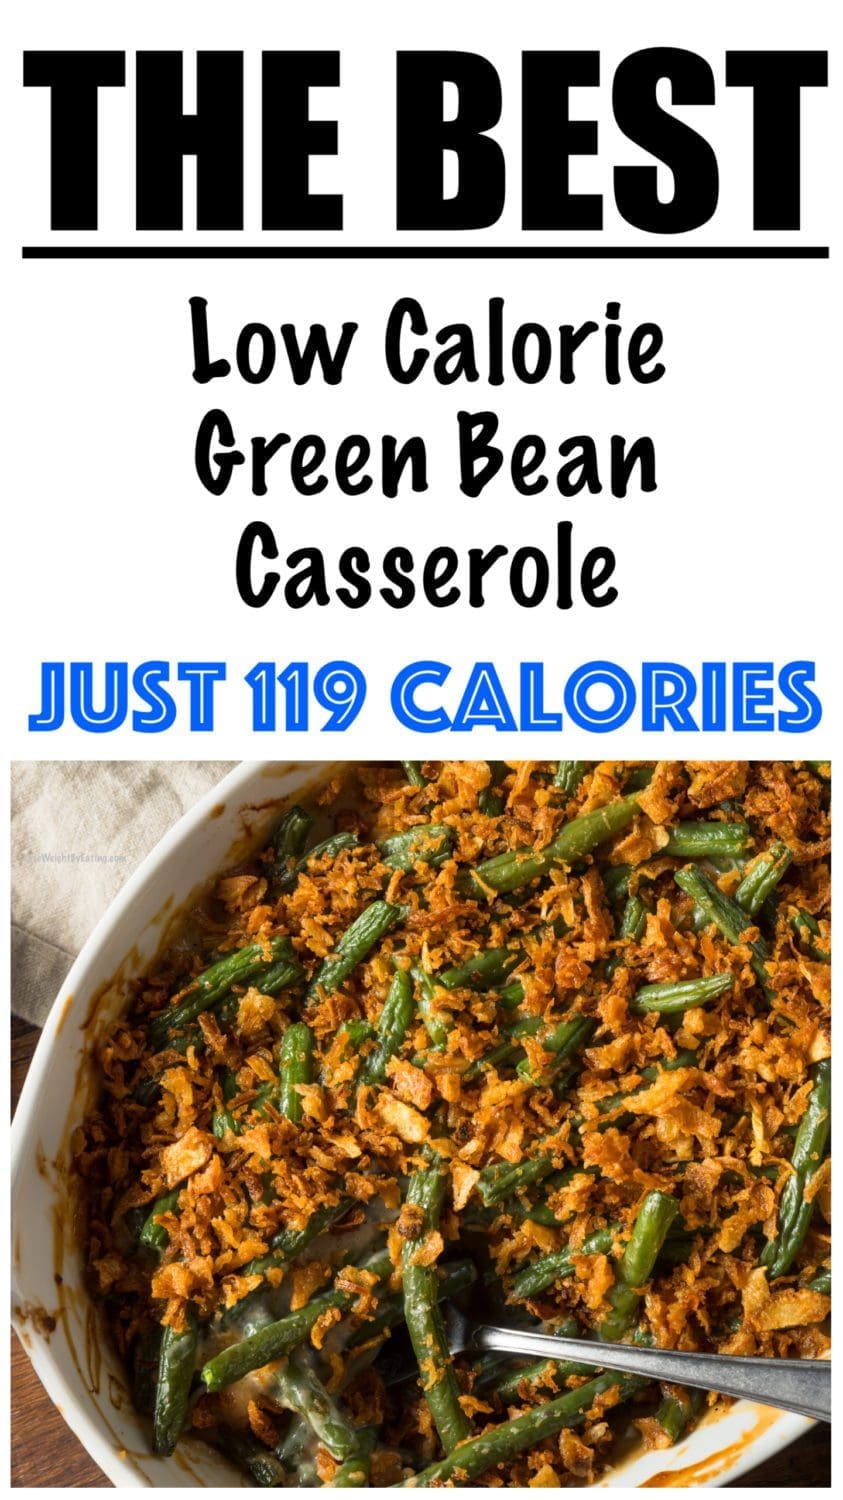 healthy recipe for green bean casserole